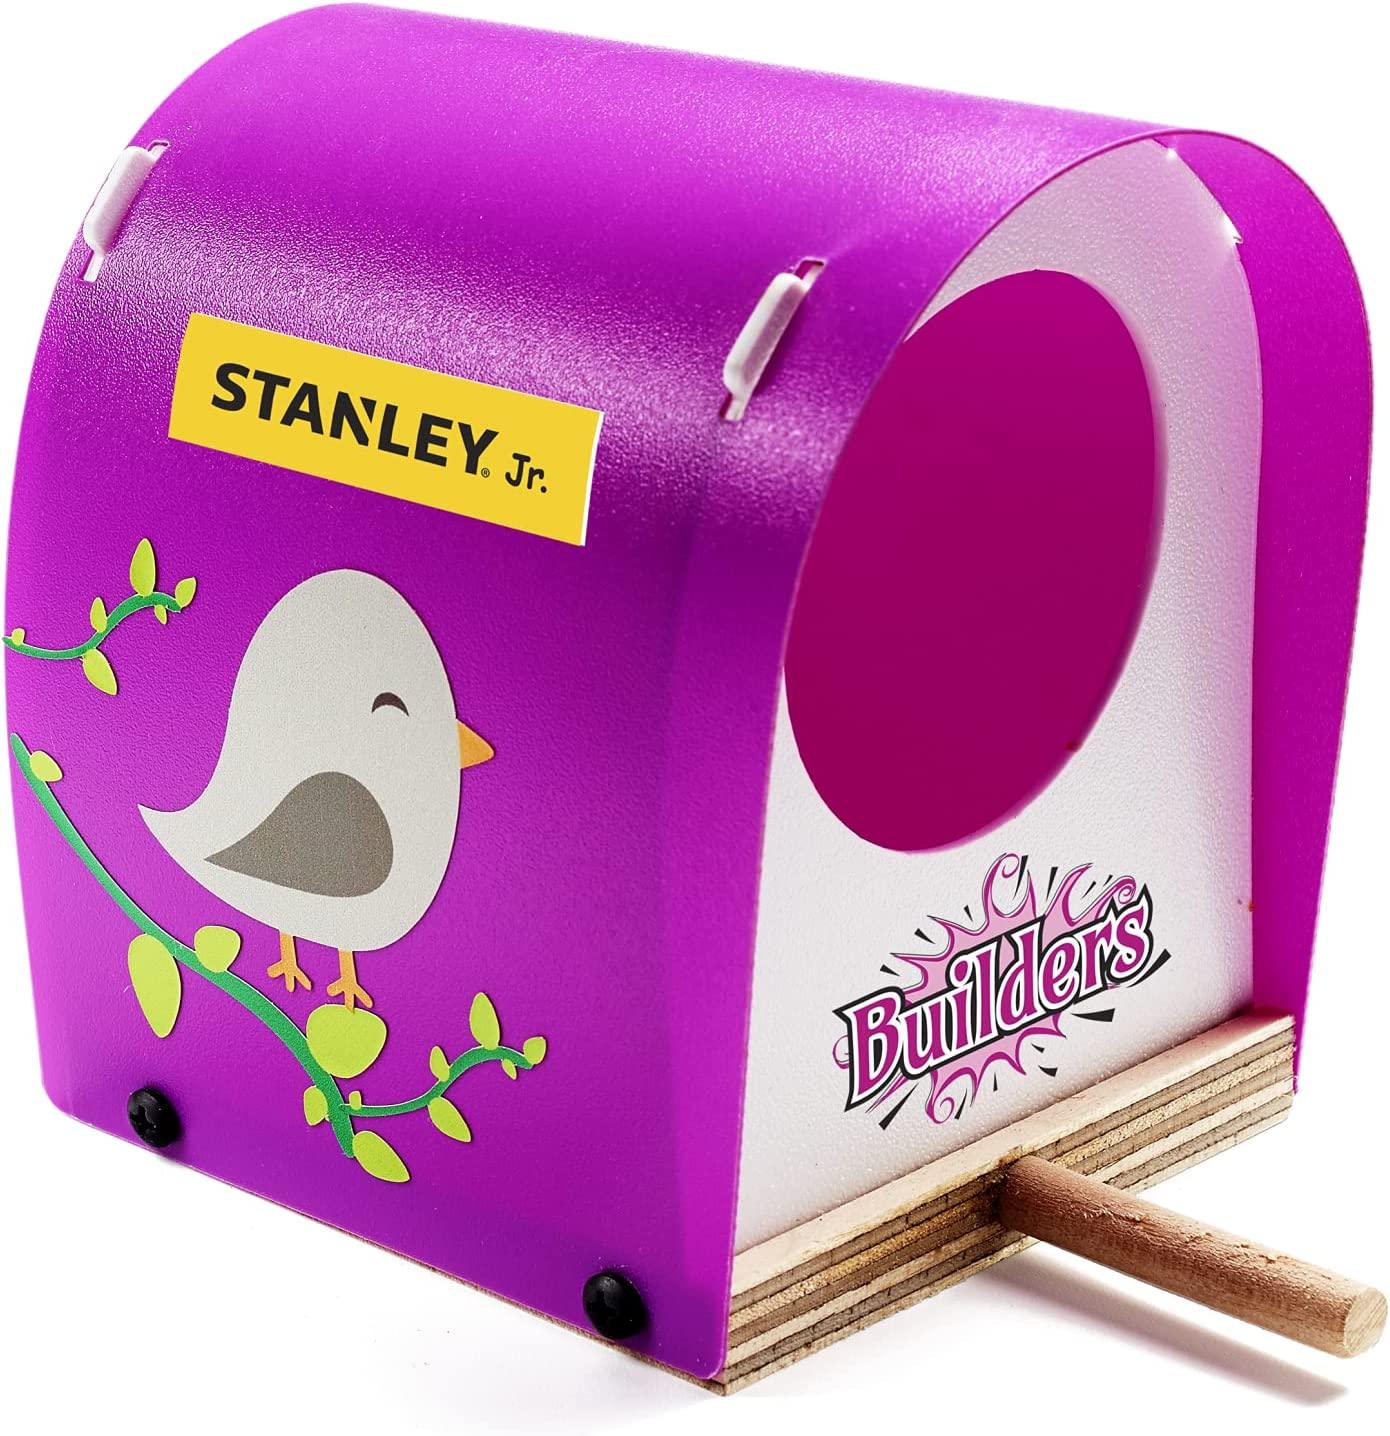 Stanley Jr.: Mini Birdhouse Construction Kit